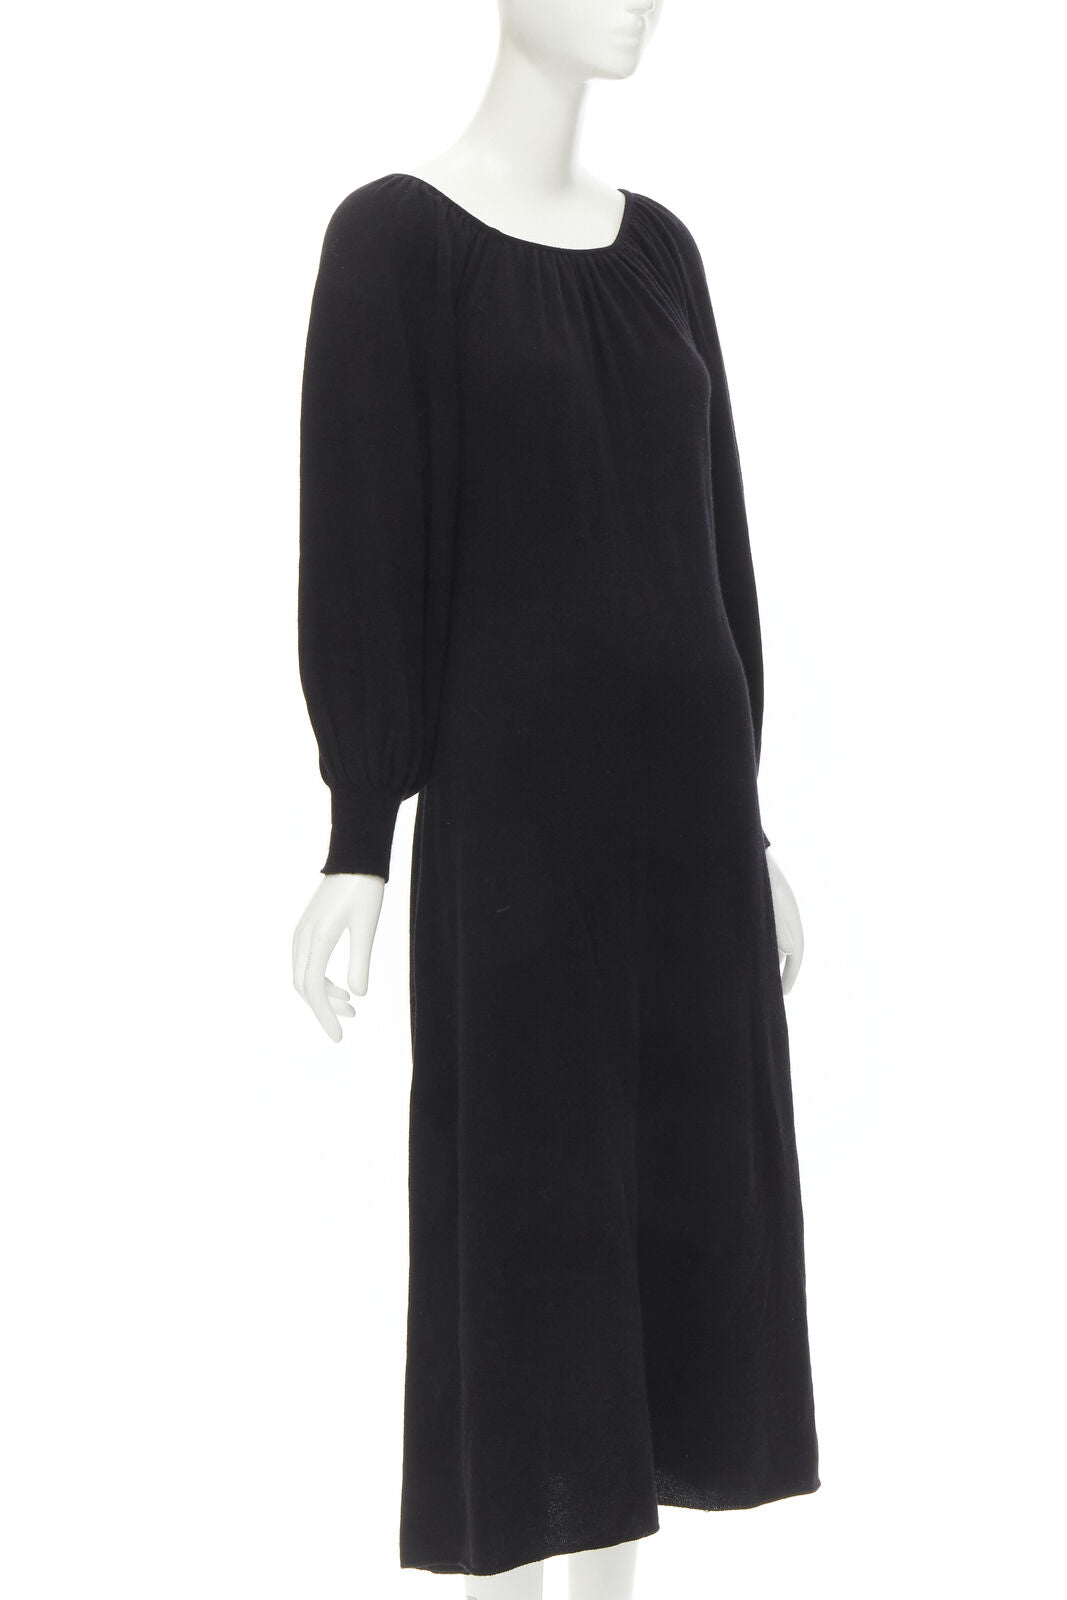 RYAN ROCHE 100% cashmere black pleated collar bubble sleeve midi dress S